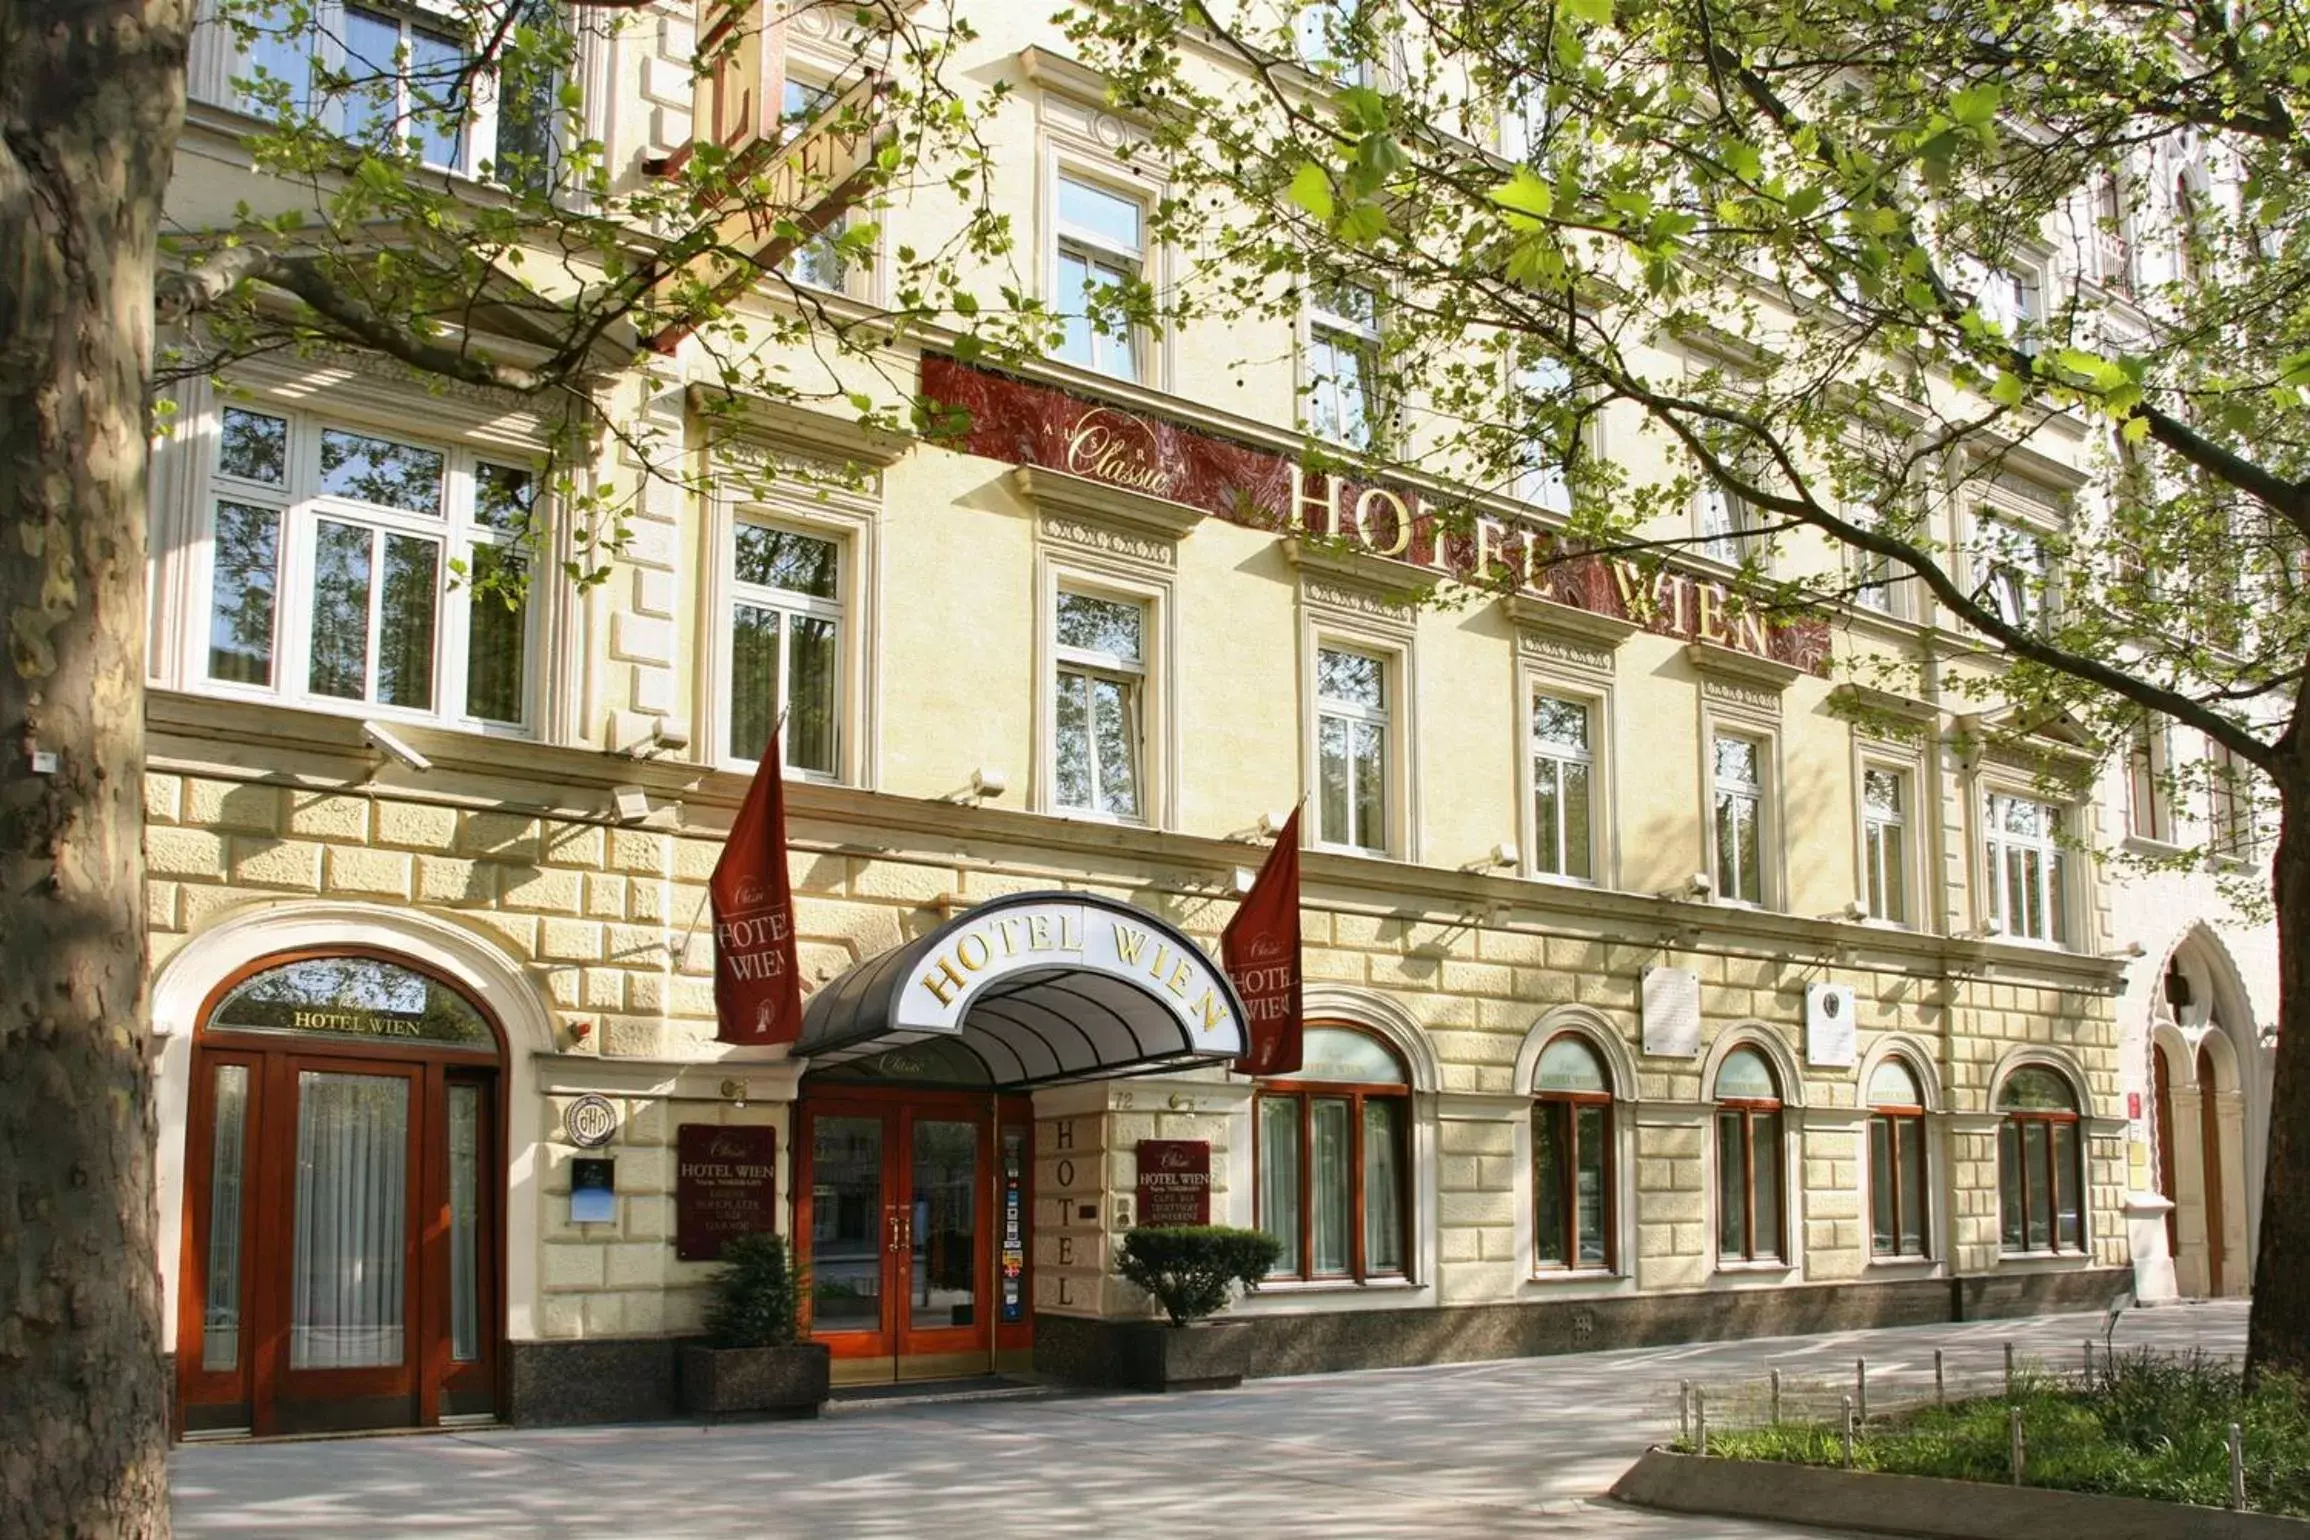 Facade/entrance in Austria Classic Hotel Wien